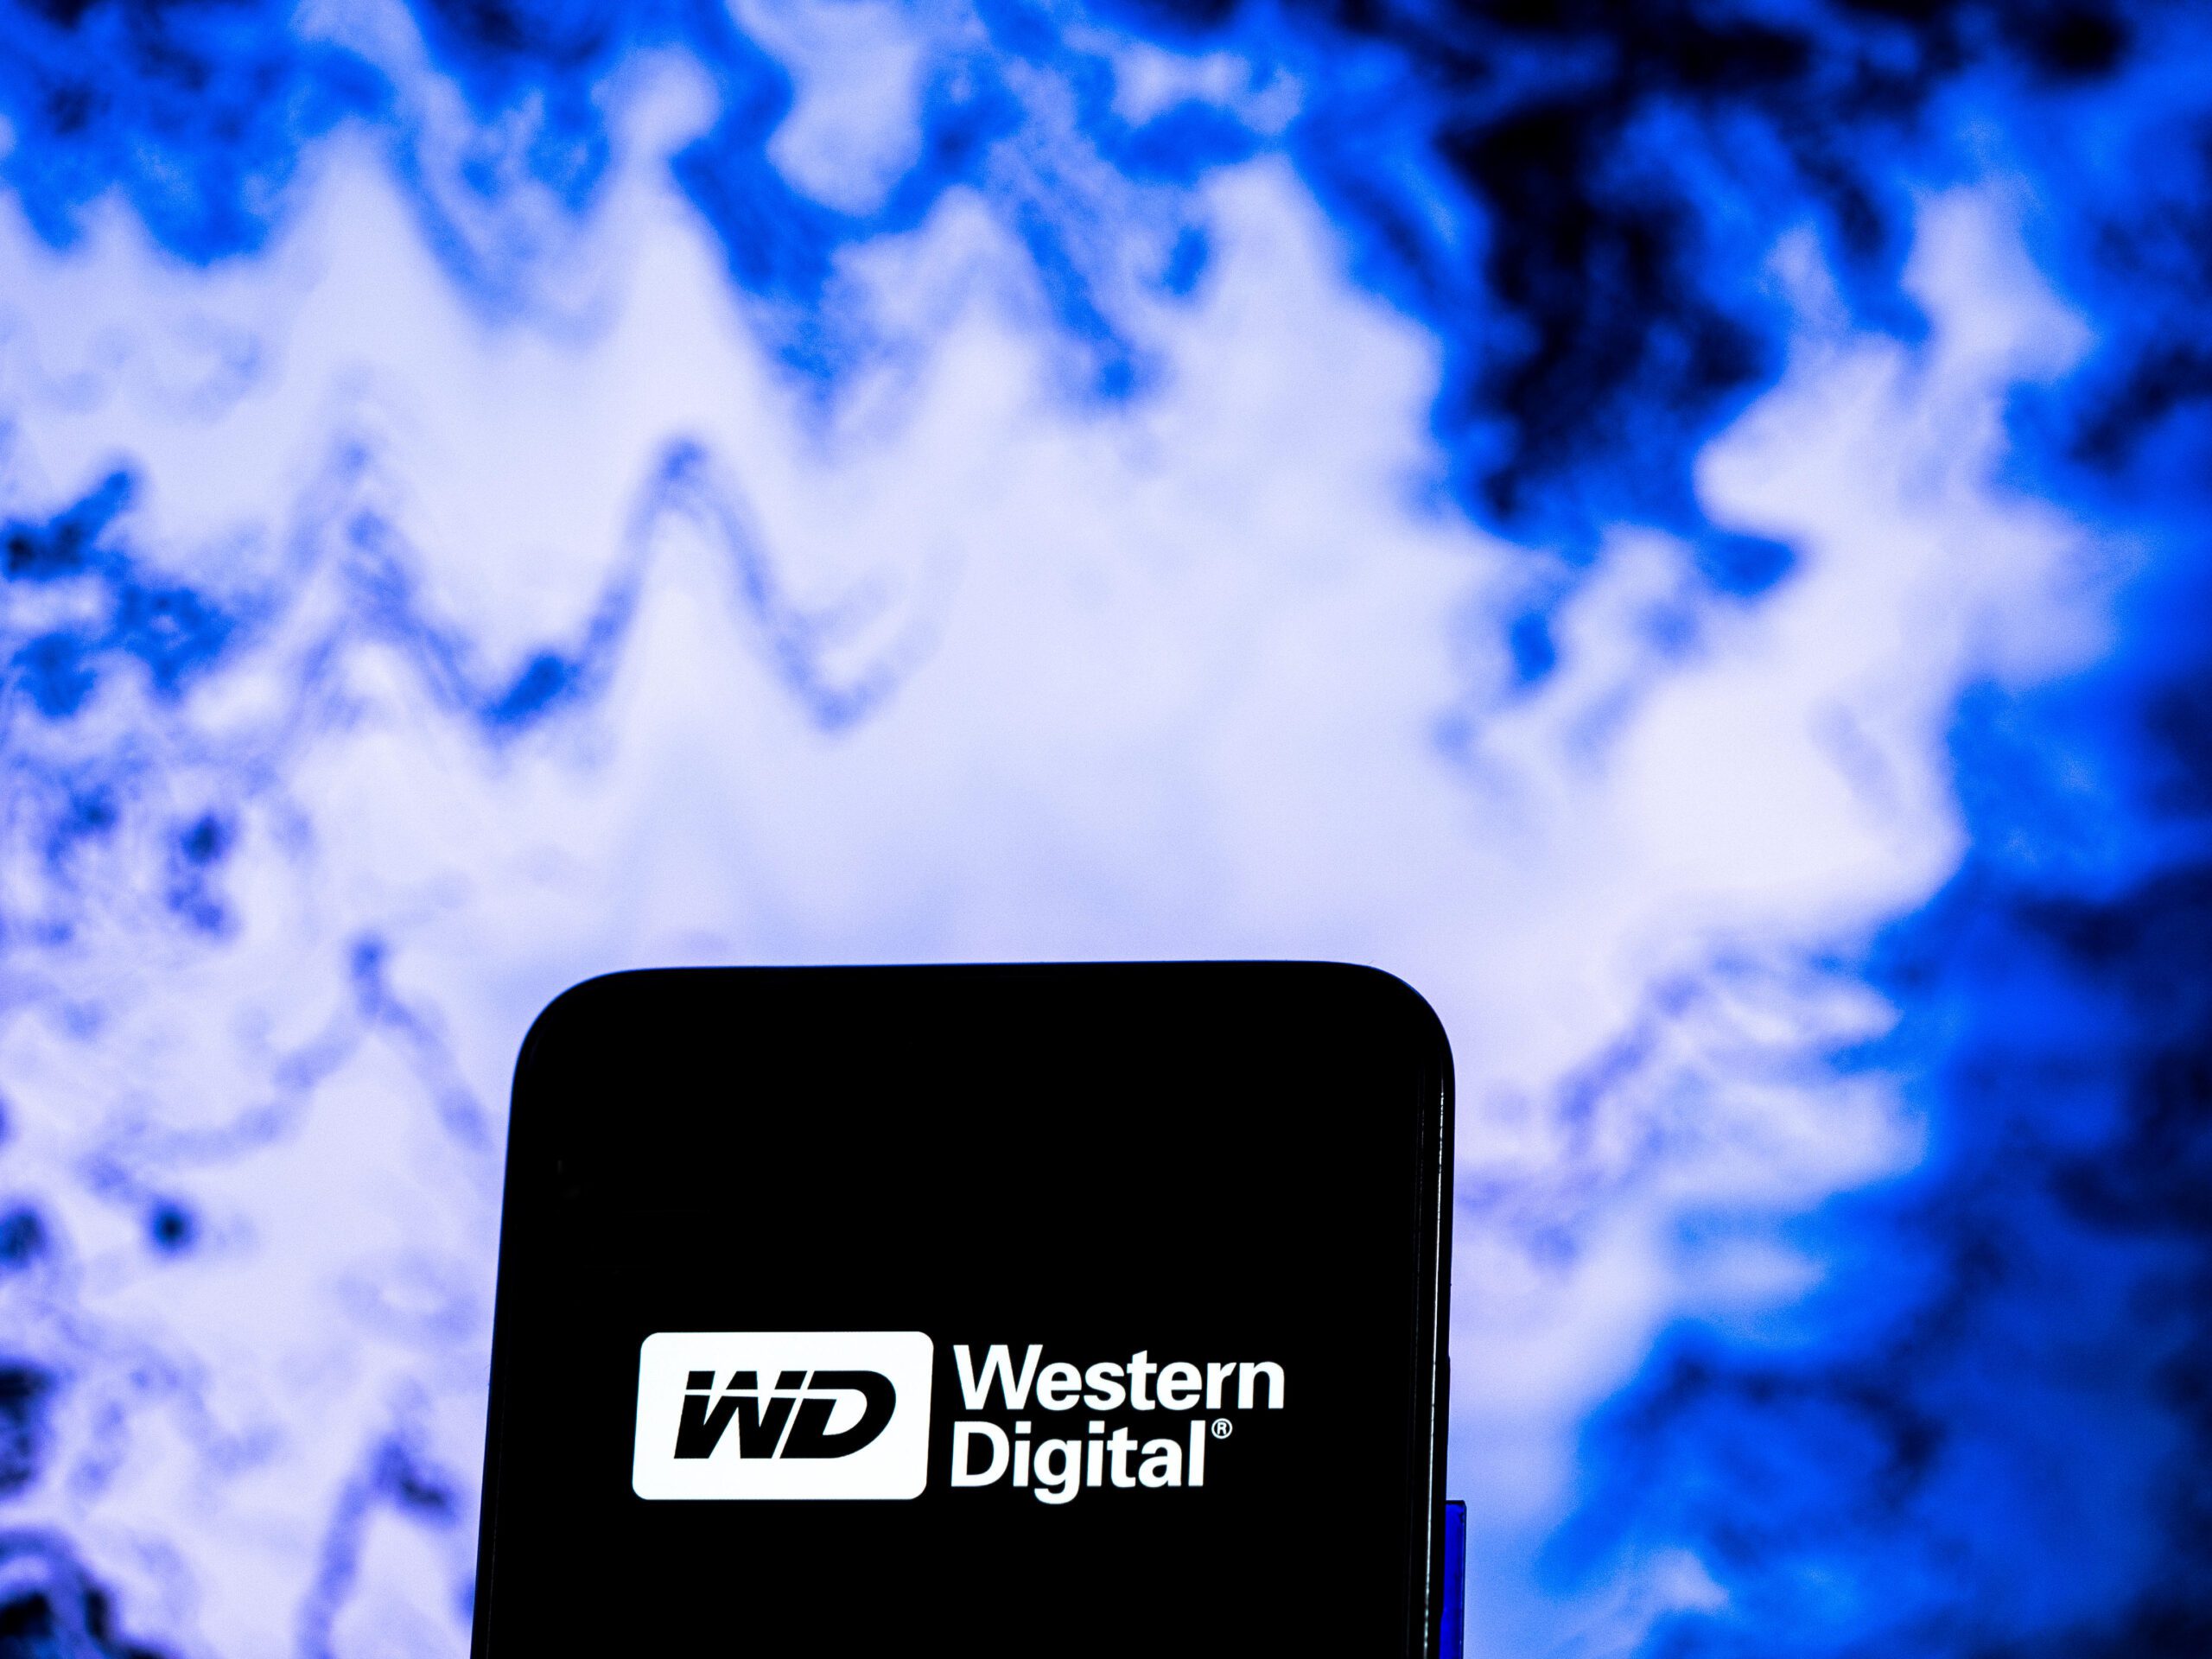 Western Digital Confirms Customer Data Stolen in Ransomware Attack – Source: www.darkreading.com